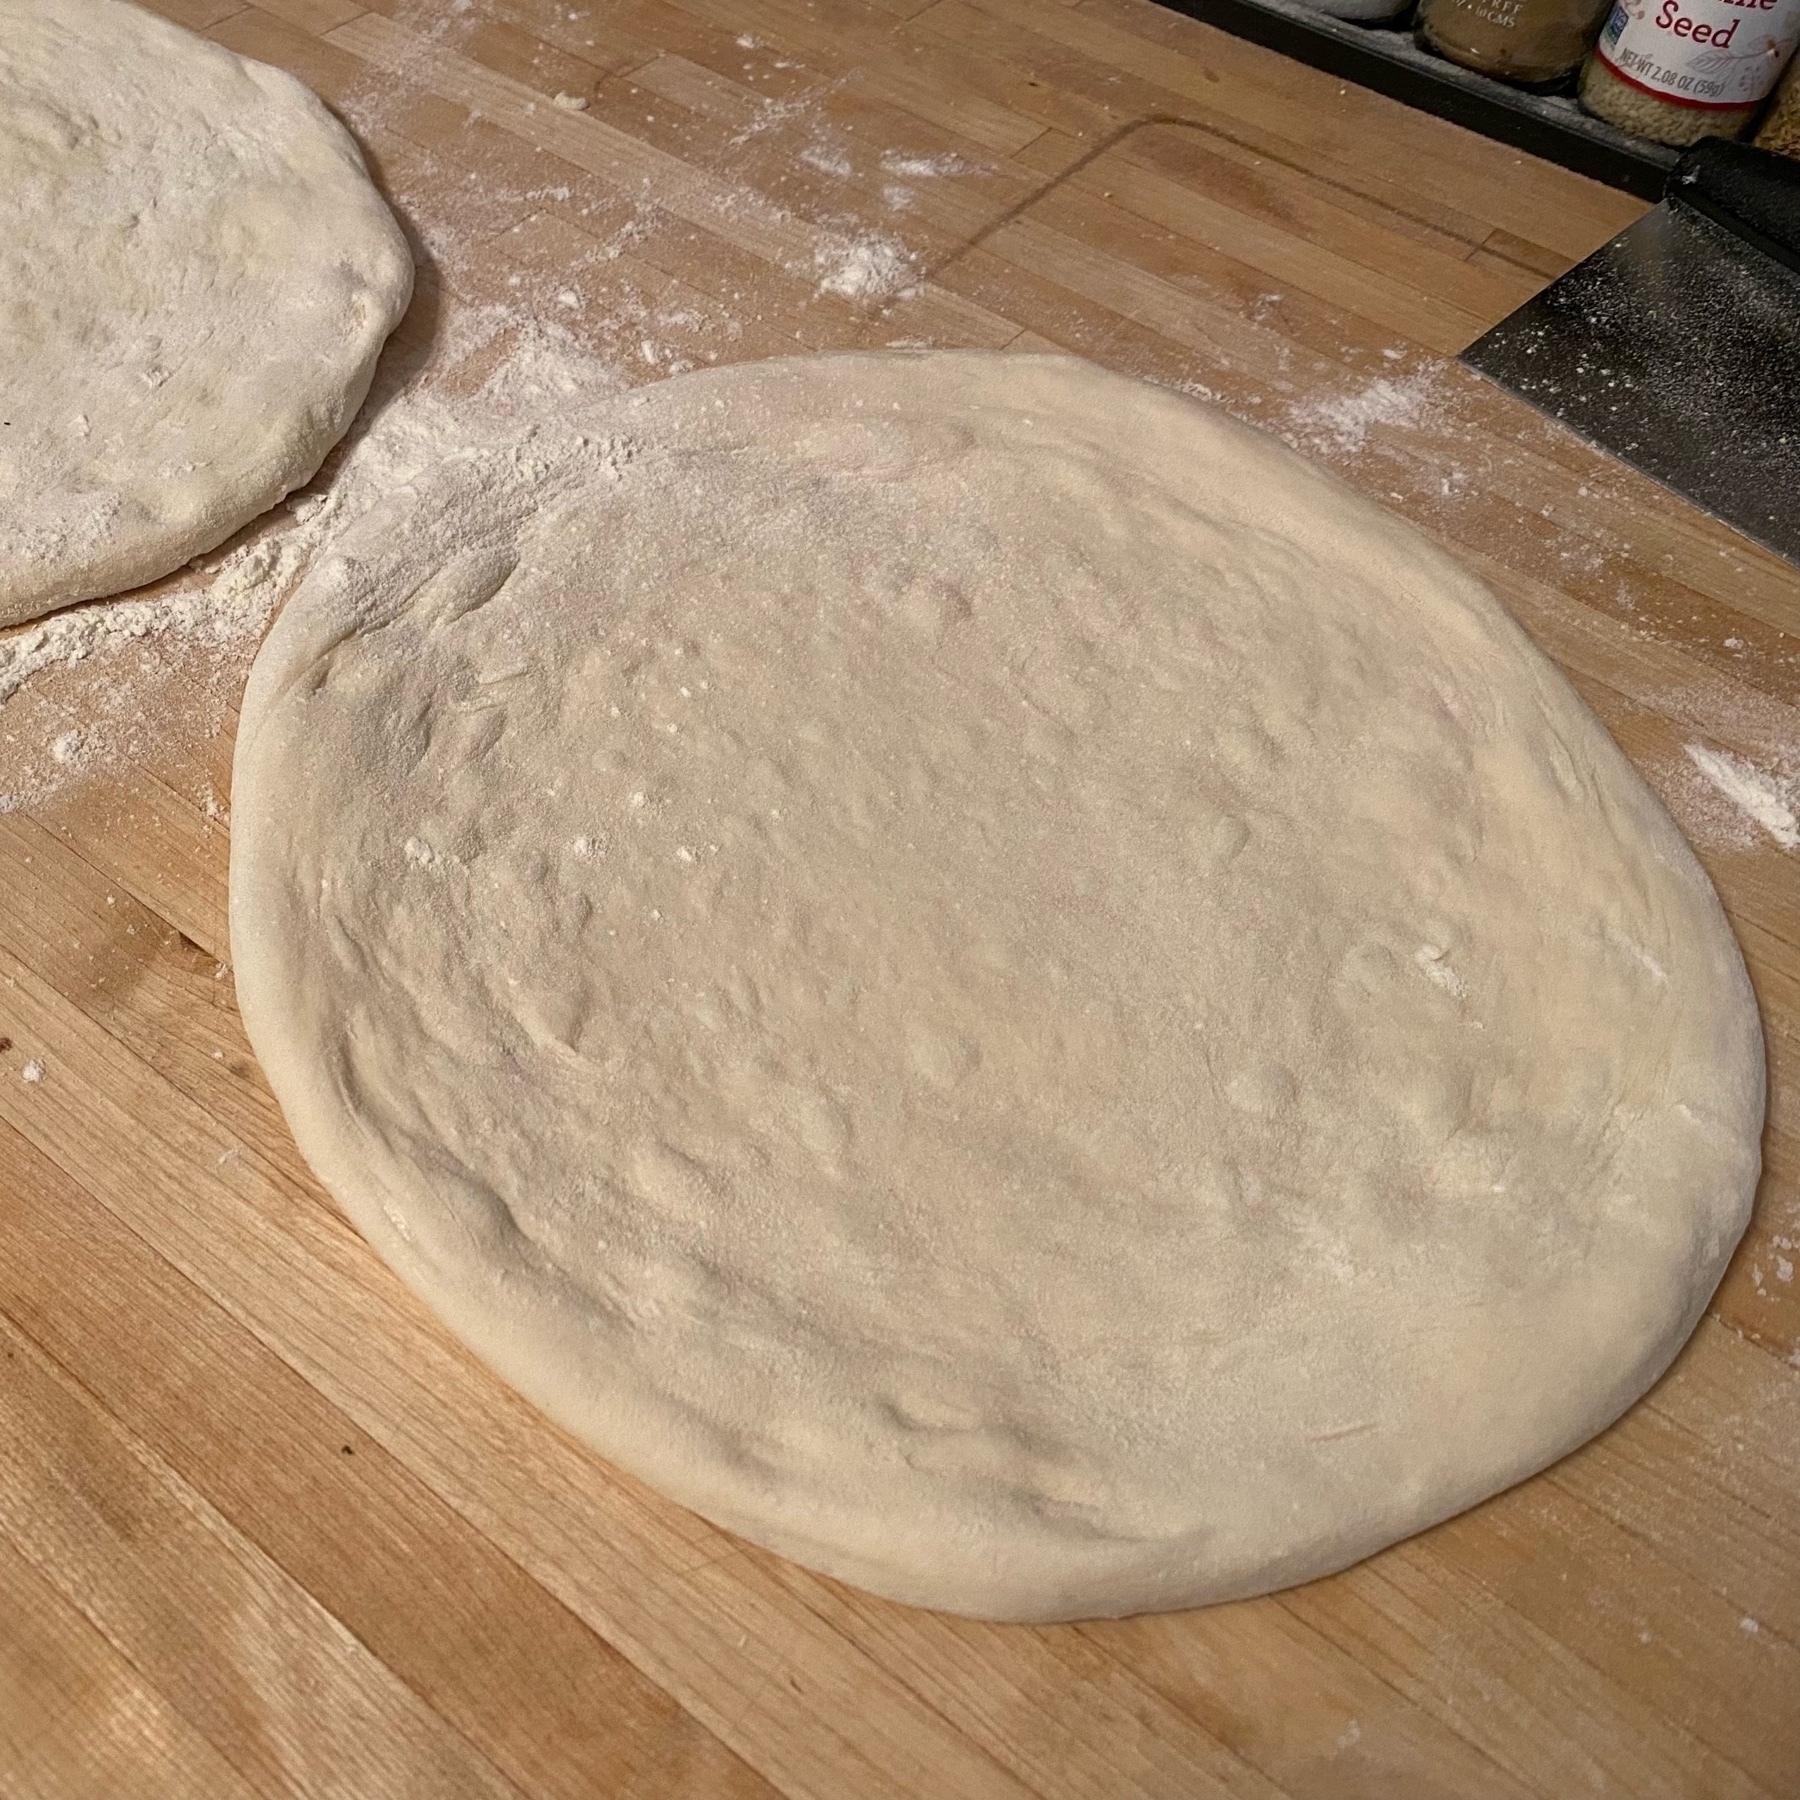 homemade pizza dough shaped into a circle